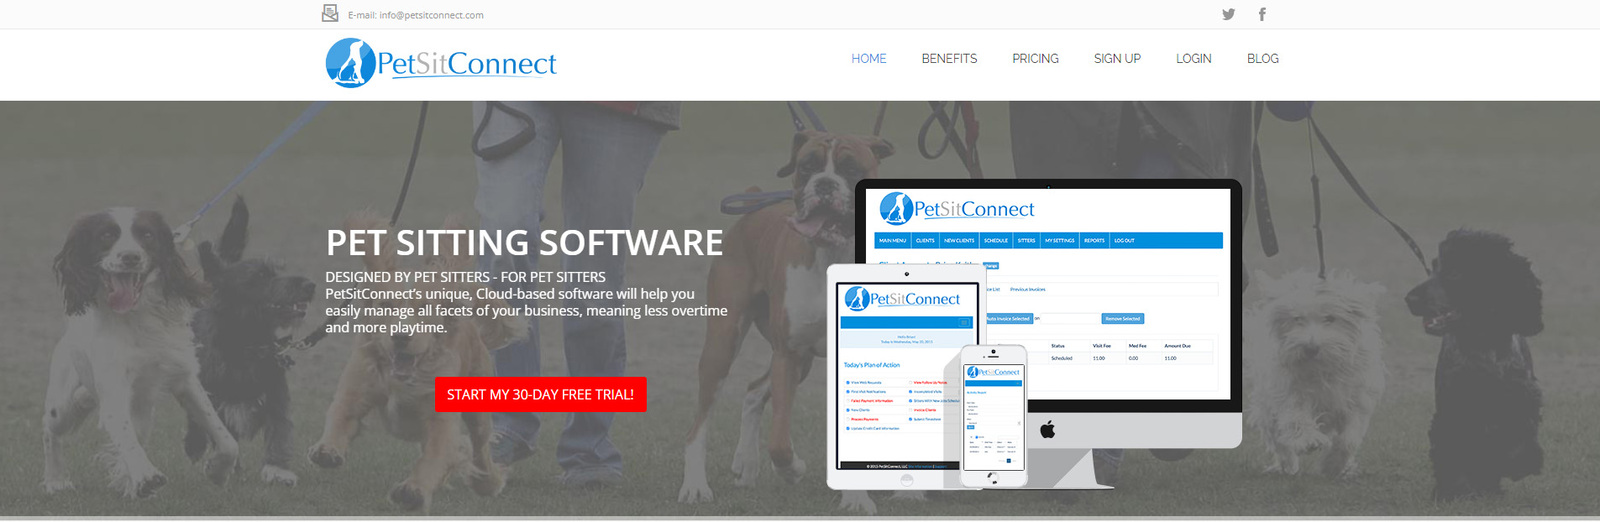 Cuplikan PetSitConnect, opsi aplikasi penitipan hewan peliharaan dengan peringkat teratas.